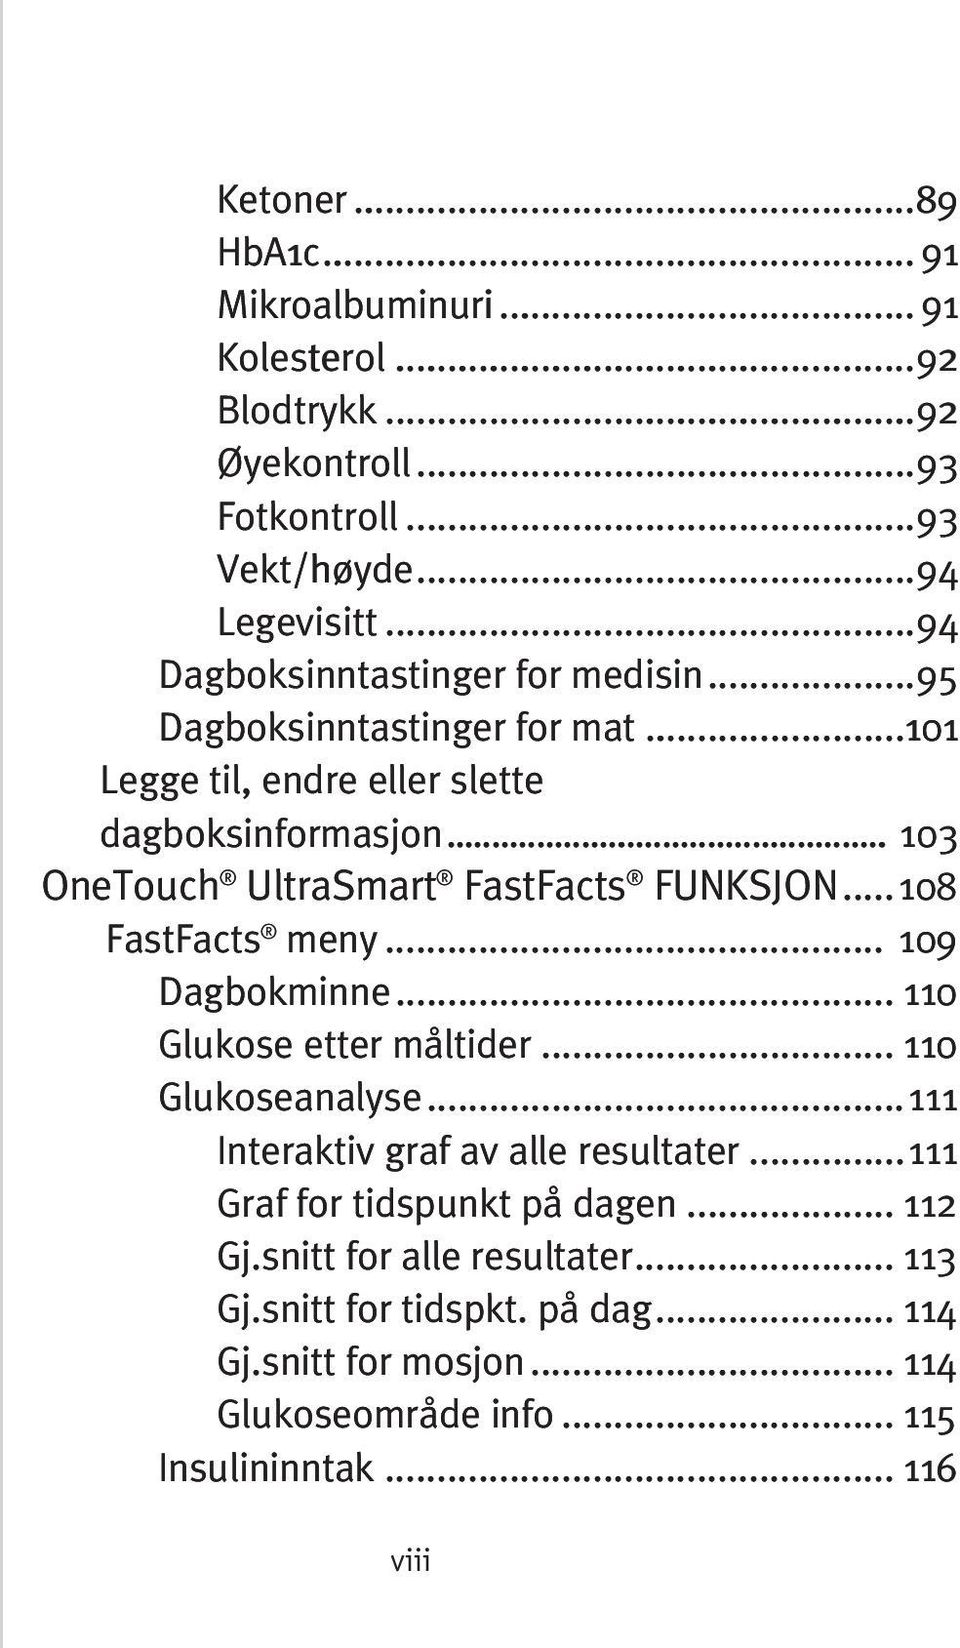 .. 103 OneTouch UltraSmart FastFacts FUNKSJON...108 FastFacts meny... 109 Dagbokminne... 110 Glukose etter måltider... 110 Glukoseanalyse.